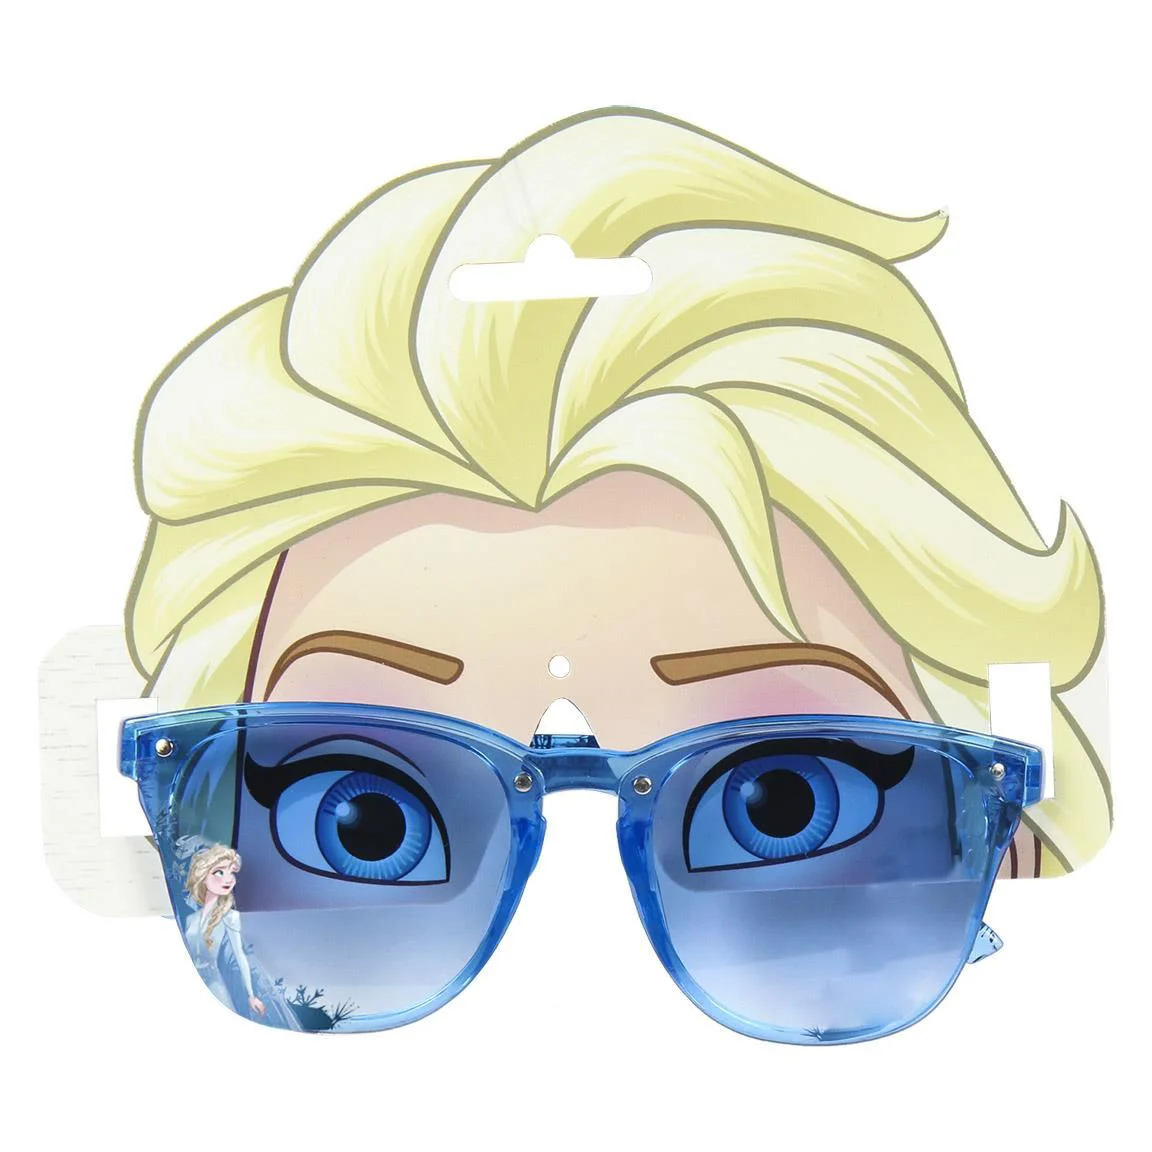 Ochelari de soare pentru copii cu protectie UV Premium Frozen 2